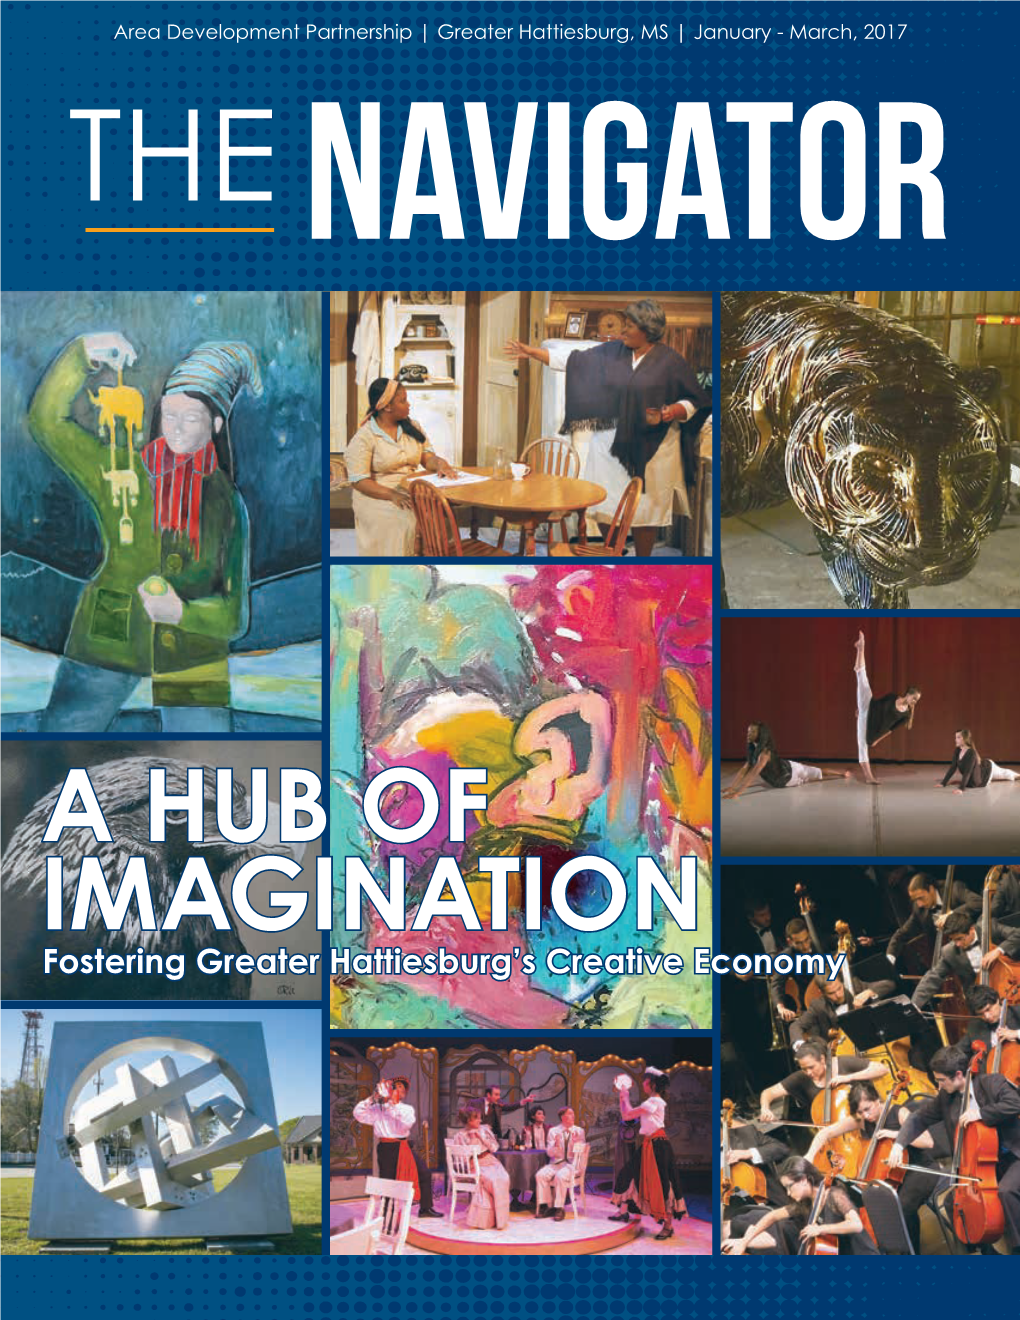 A Hub of Imagination